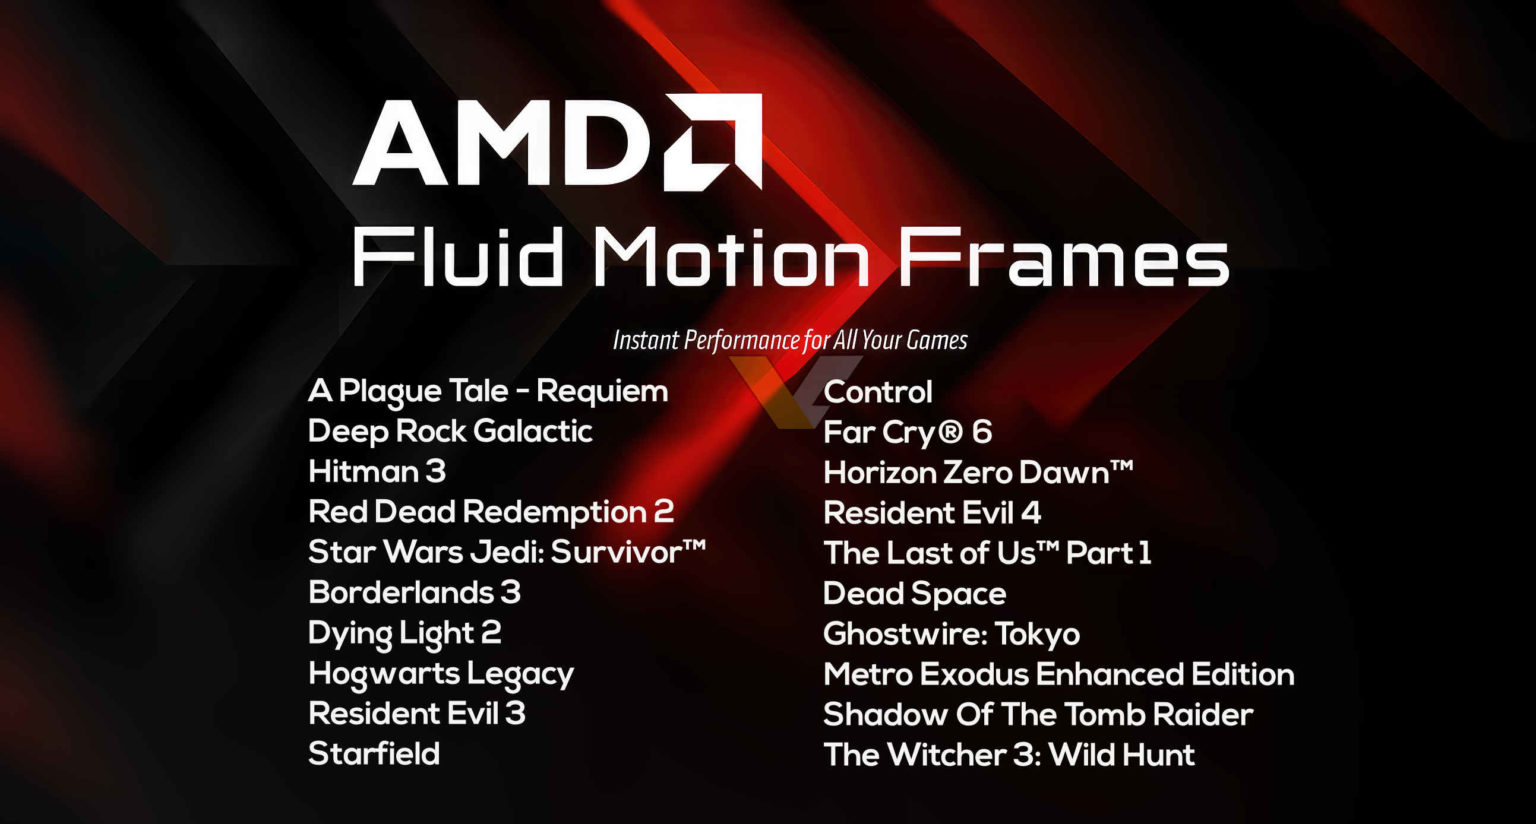 AMD-FLUID-MOTION-FRAMES-GAMES-LAUNCH-1536x824.jpg